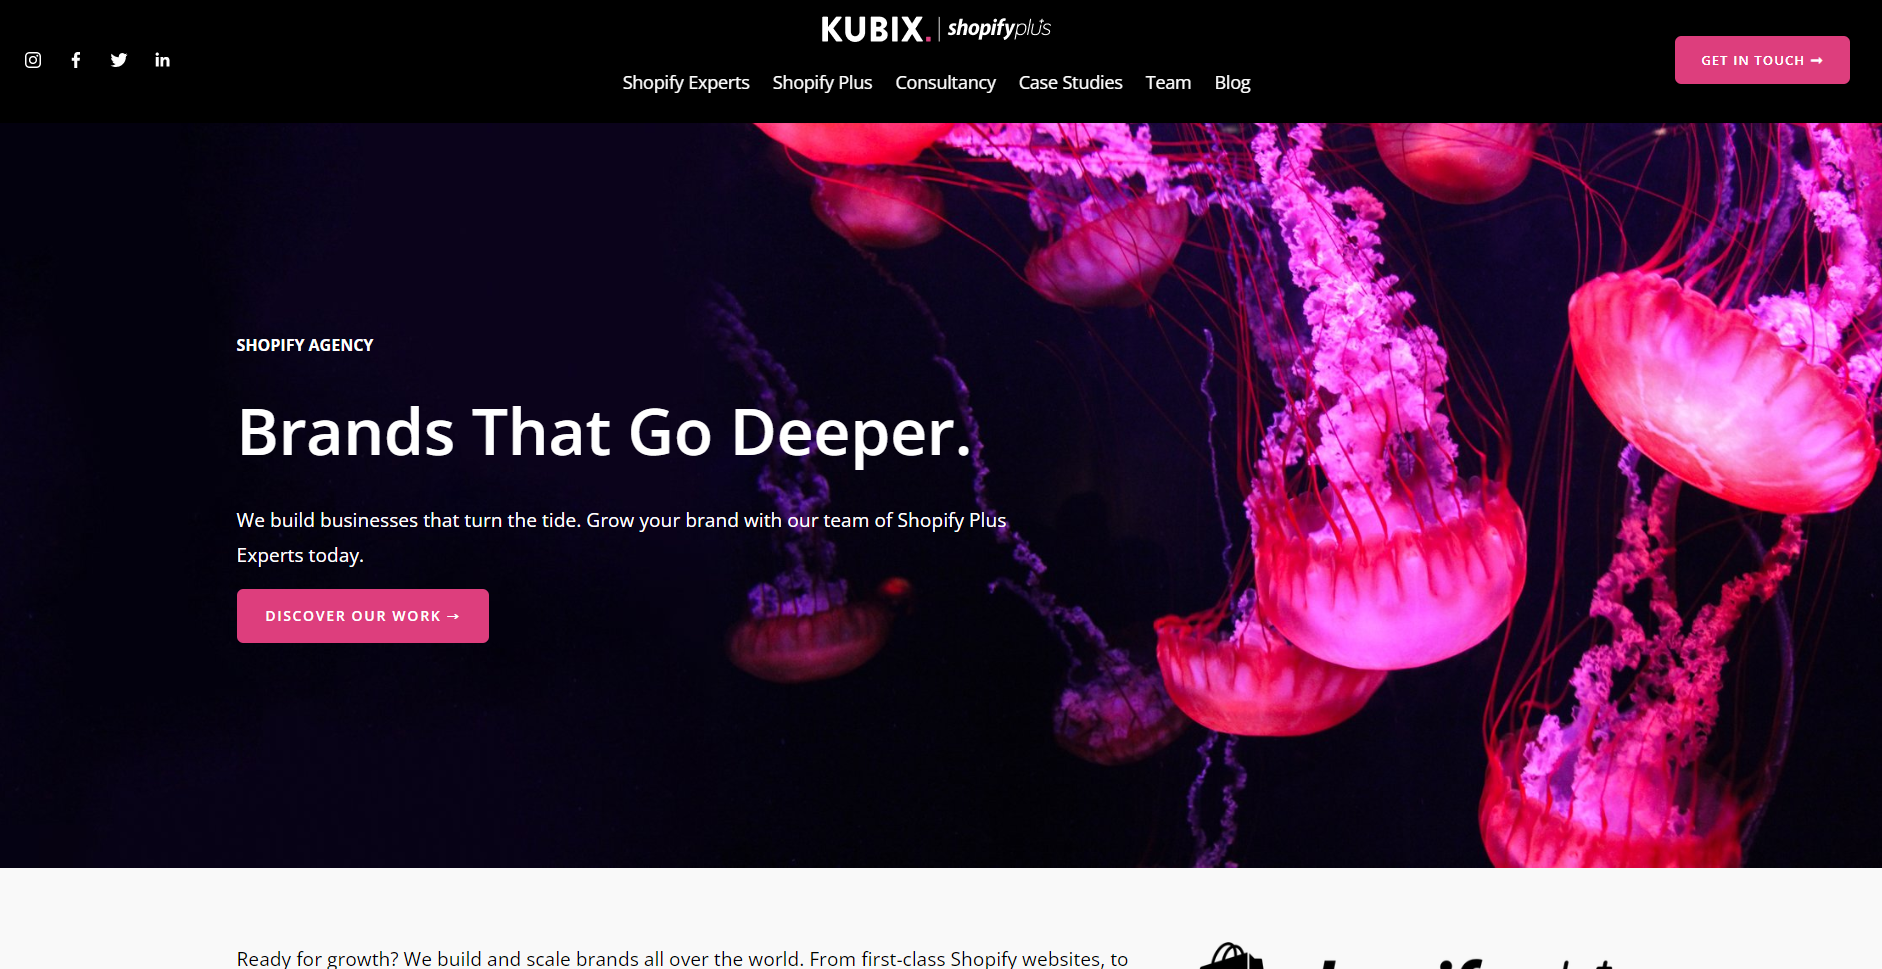 Kubix Media Shopify Agency Homepage